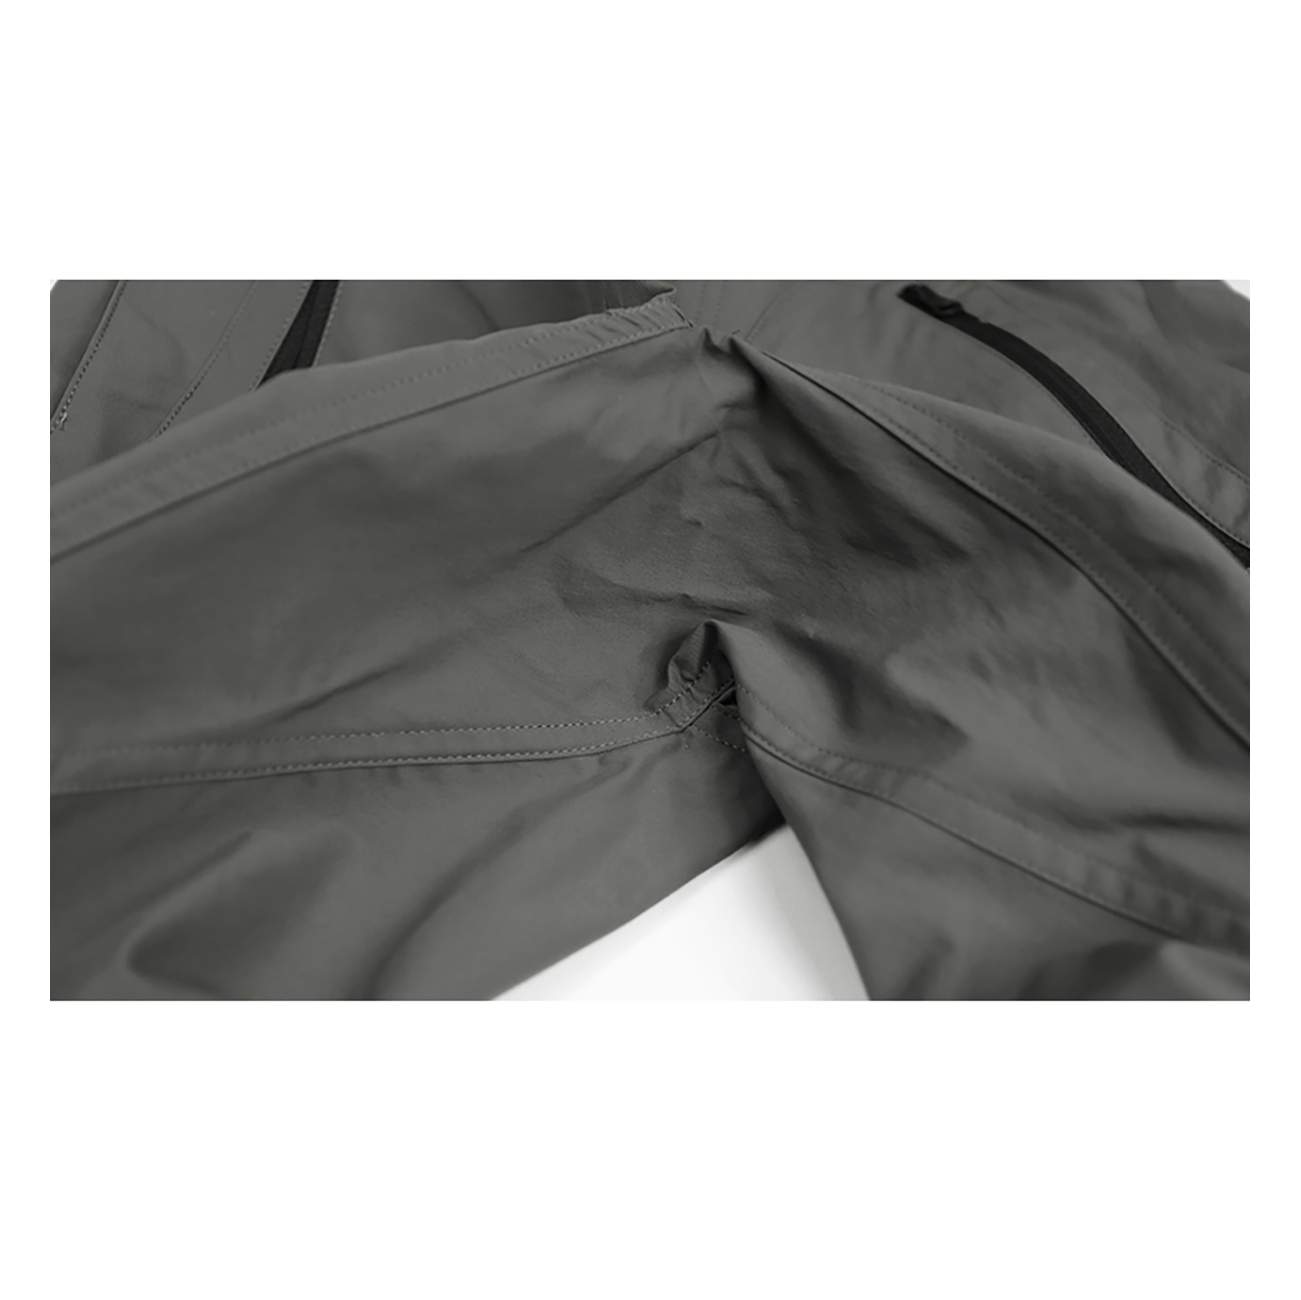 CAYL Mountain pants2- Grey